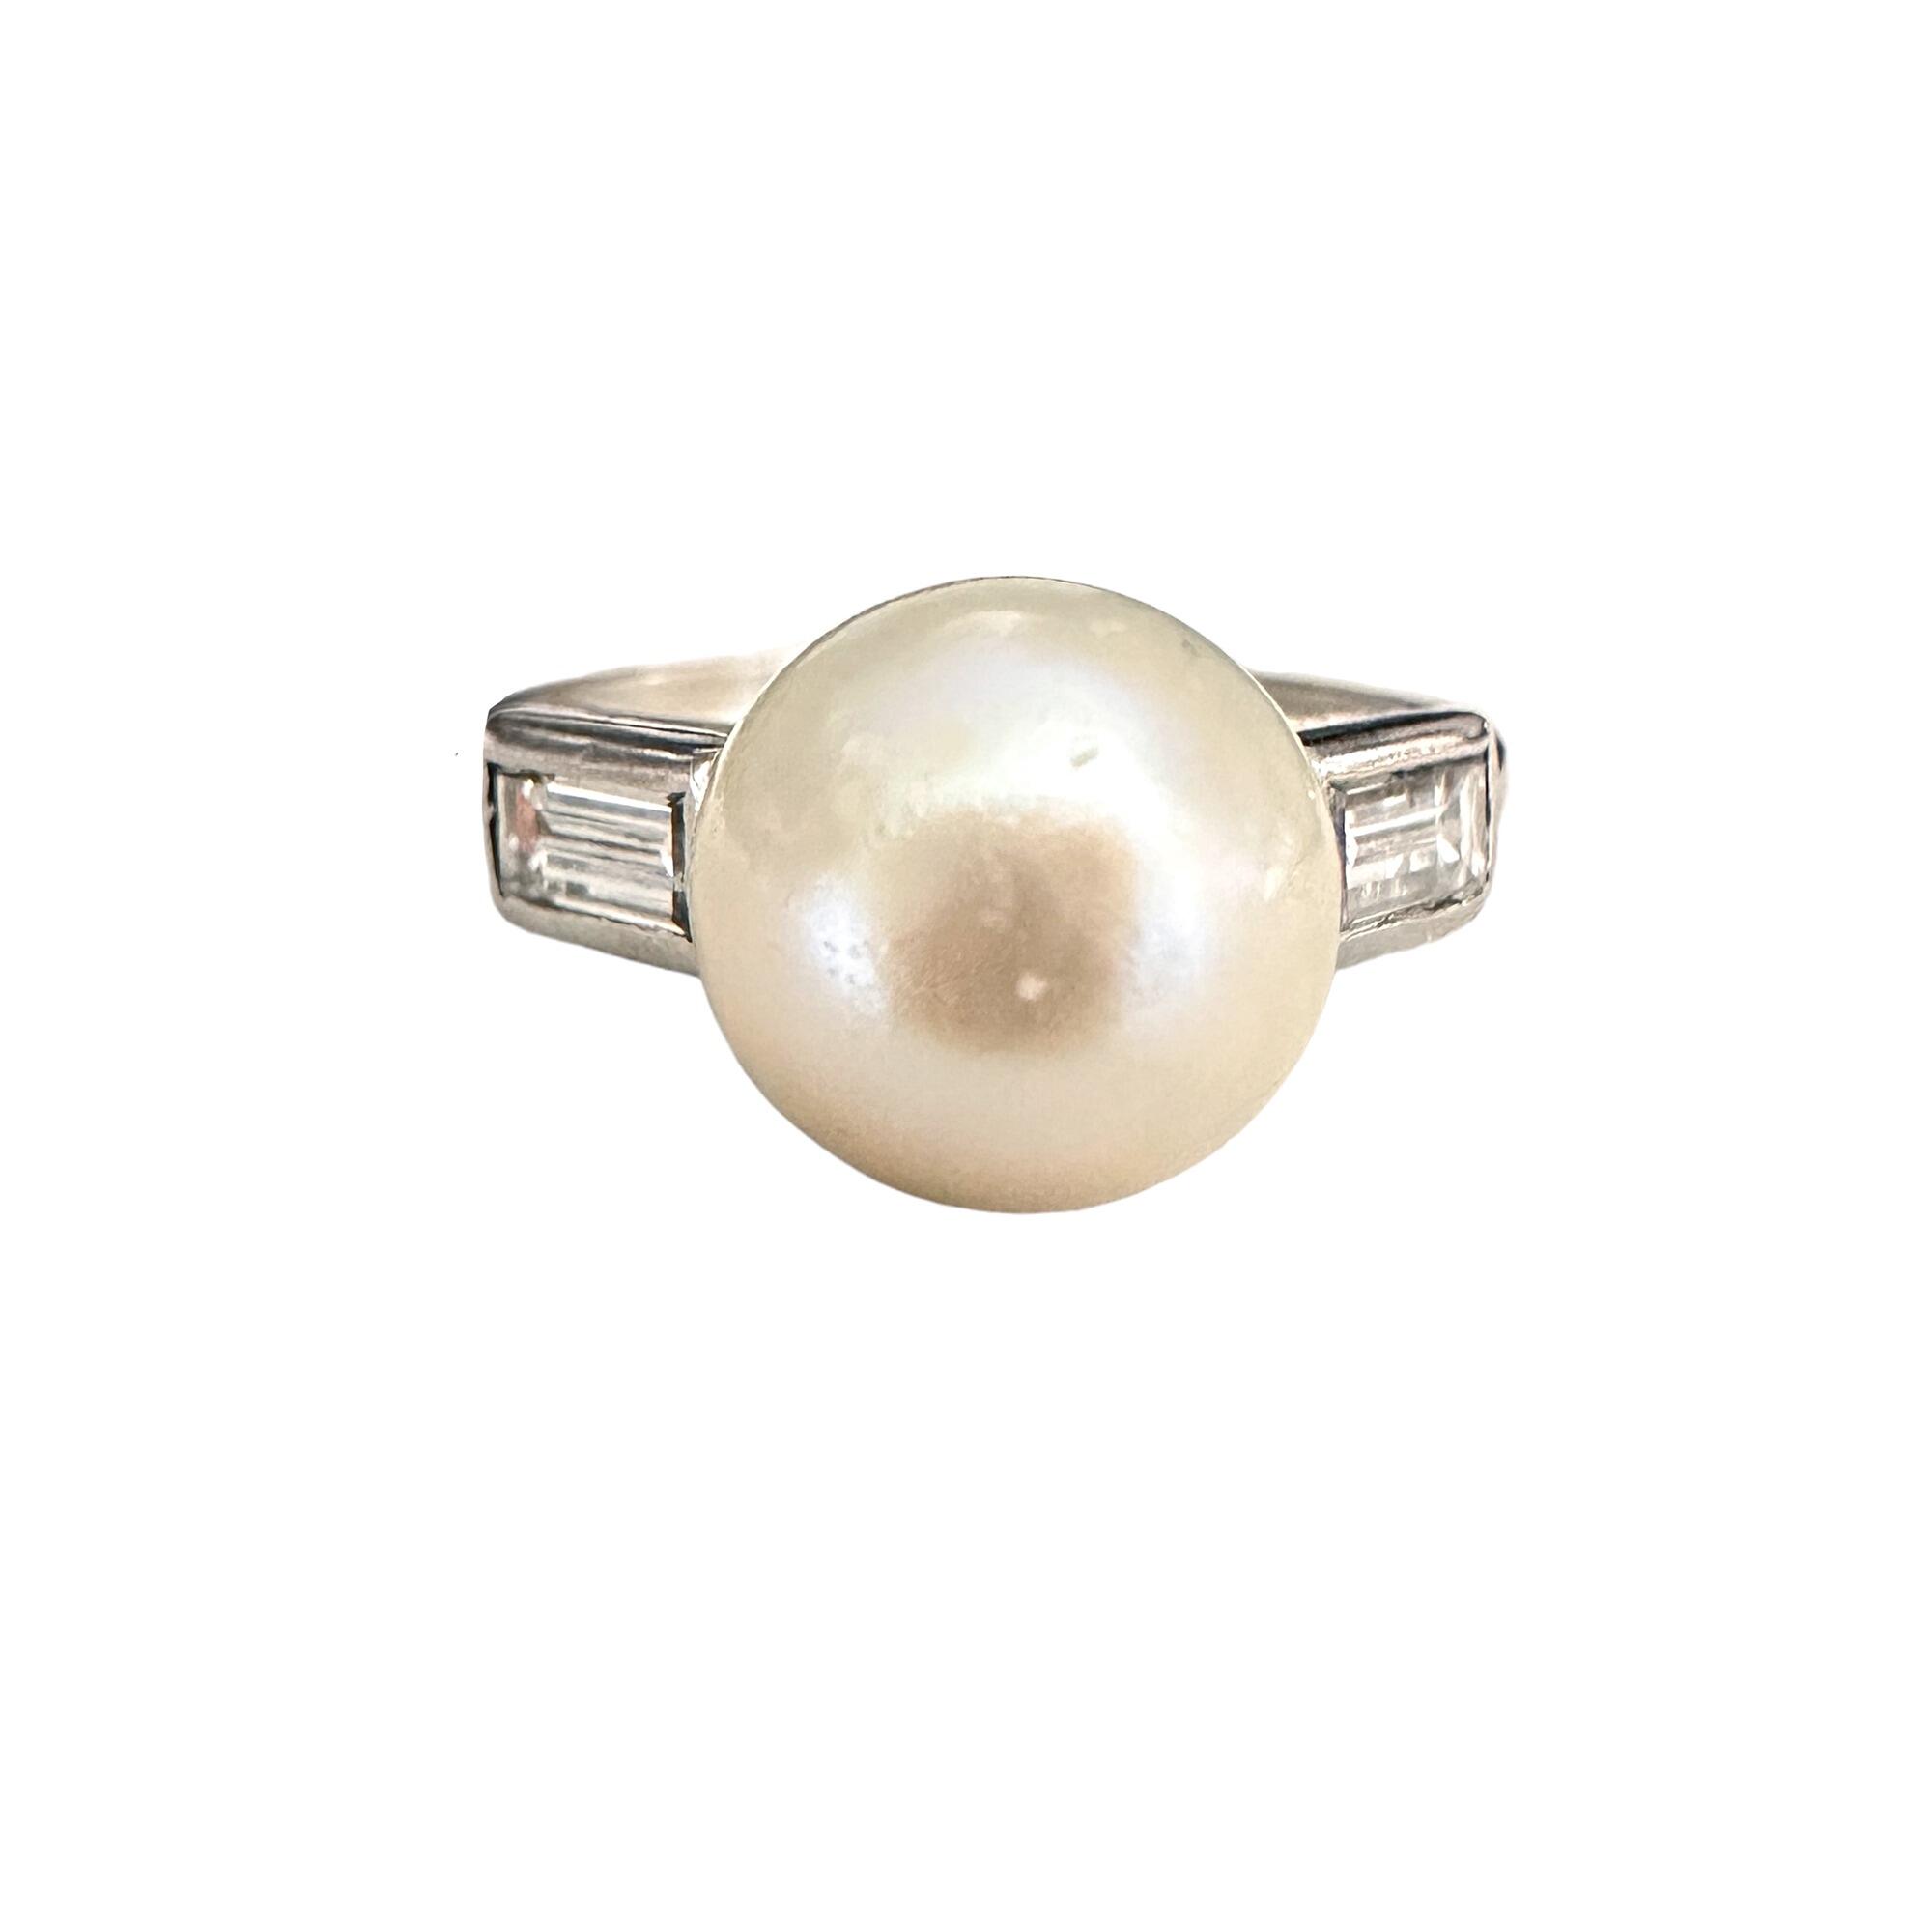 SOLD - Art Deco, Platinum, Cultured Pearl & Baguette Diamond Ring